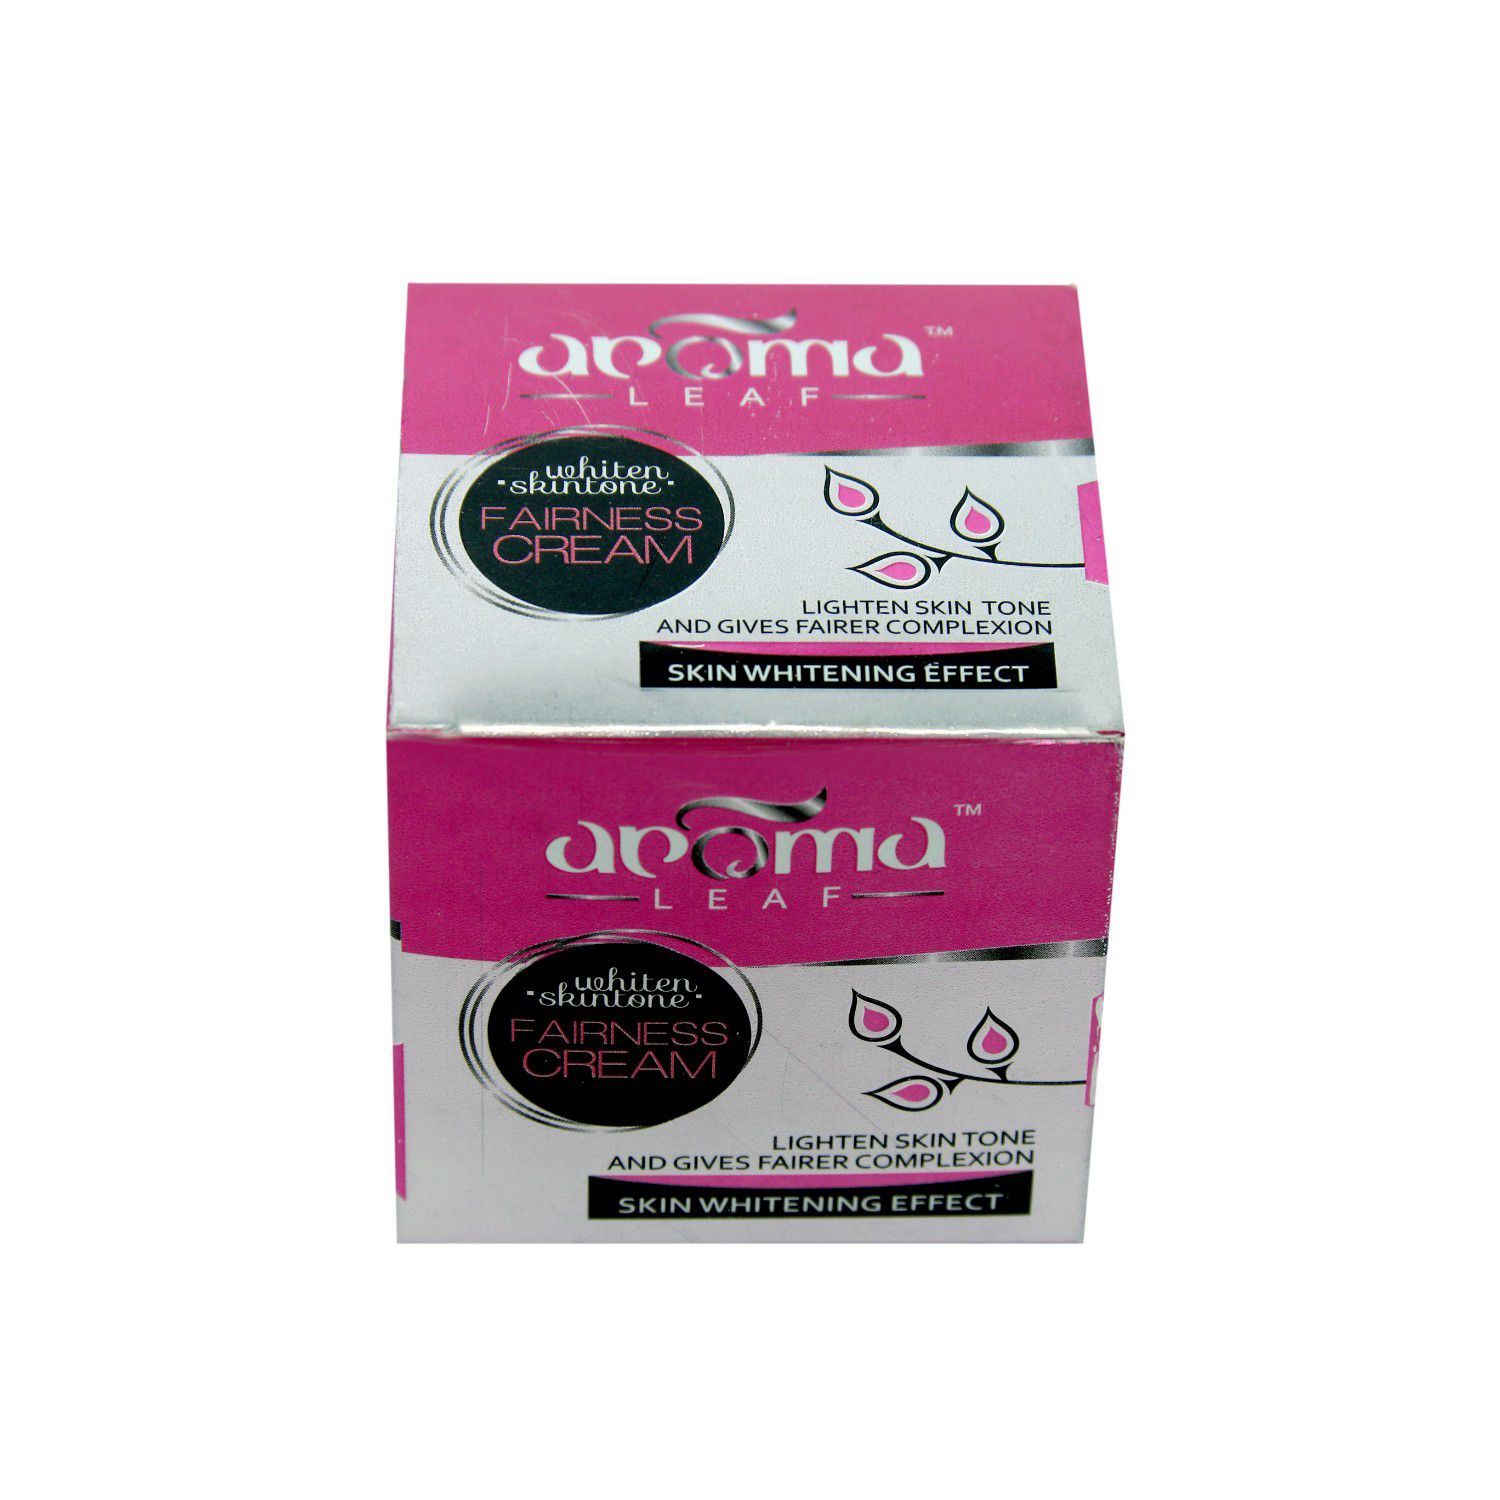 Aroma Leaf Fairness Cream Day Cream 100 gm Pack of 2: Buy Aroma Leaf ...